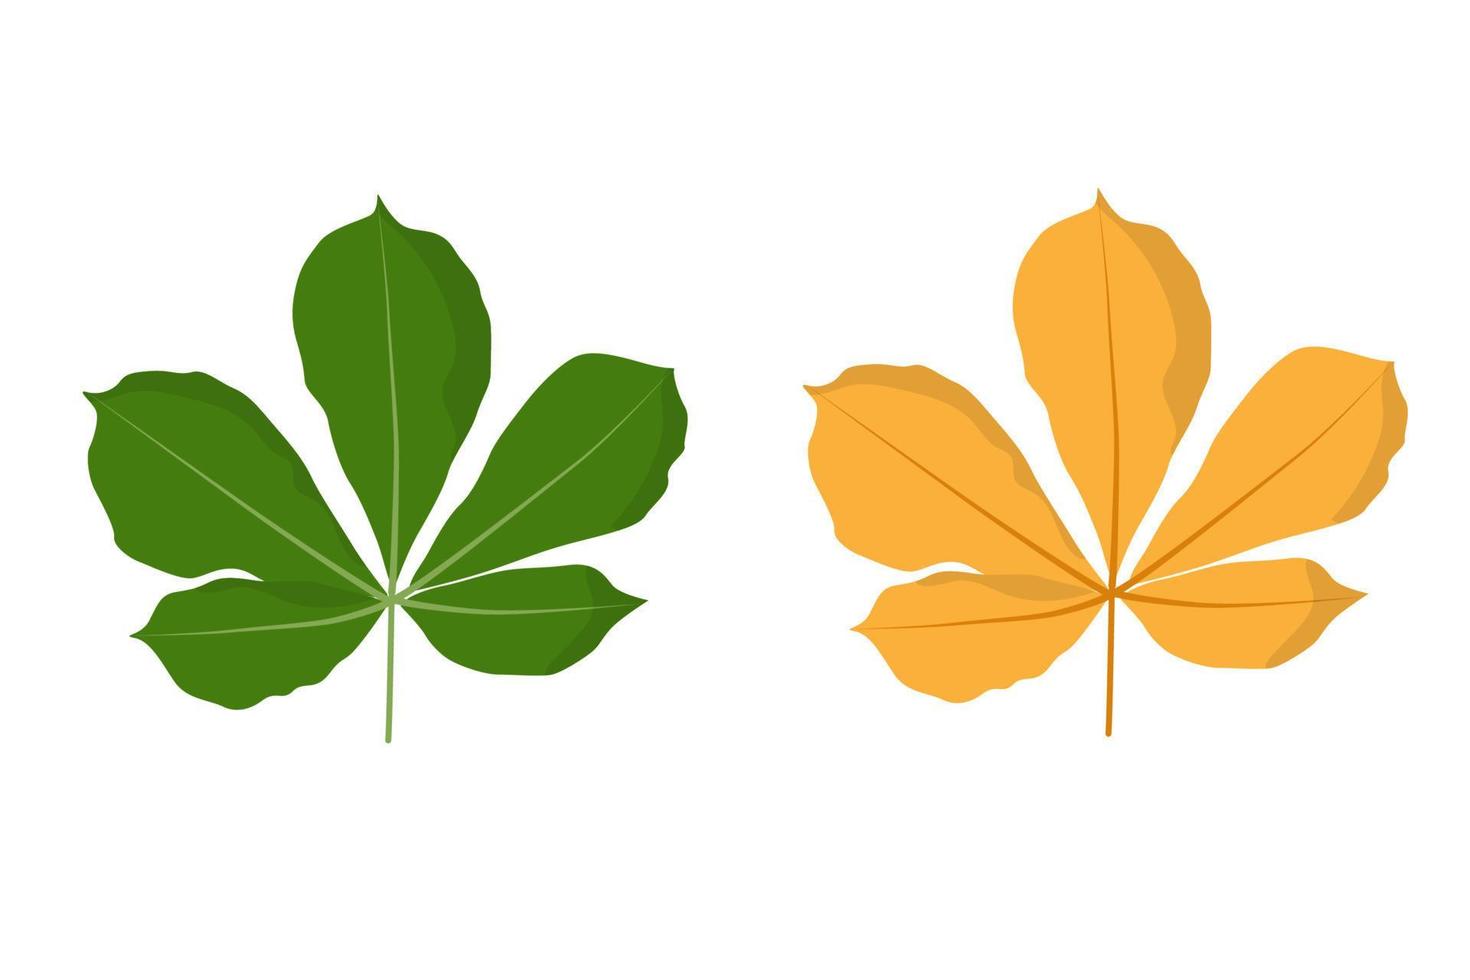 Chestnut leaf. Spring green and autumn orange. Isolated vector illustration on white background